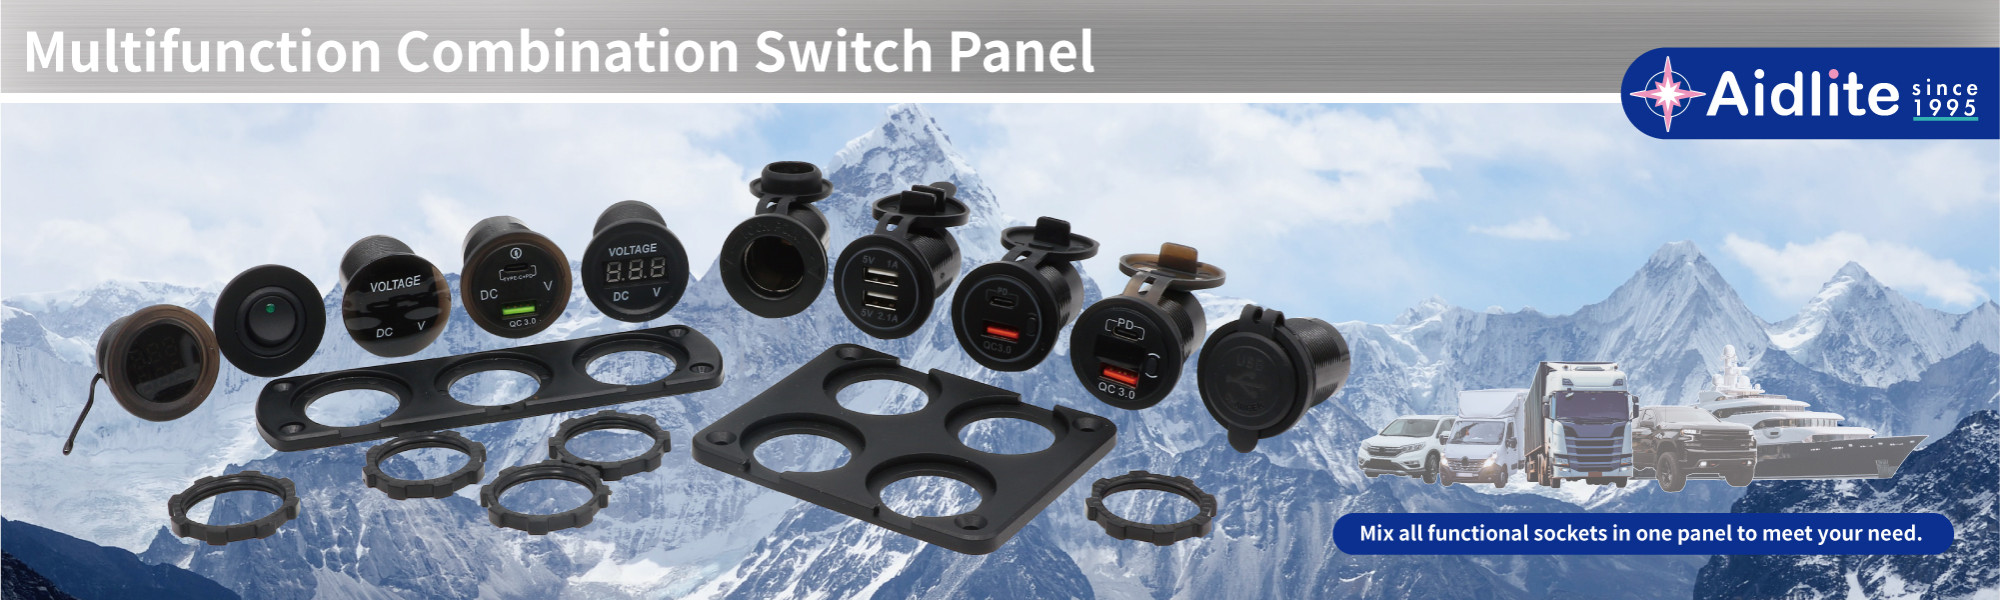 Multifunction Combination switch panel